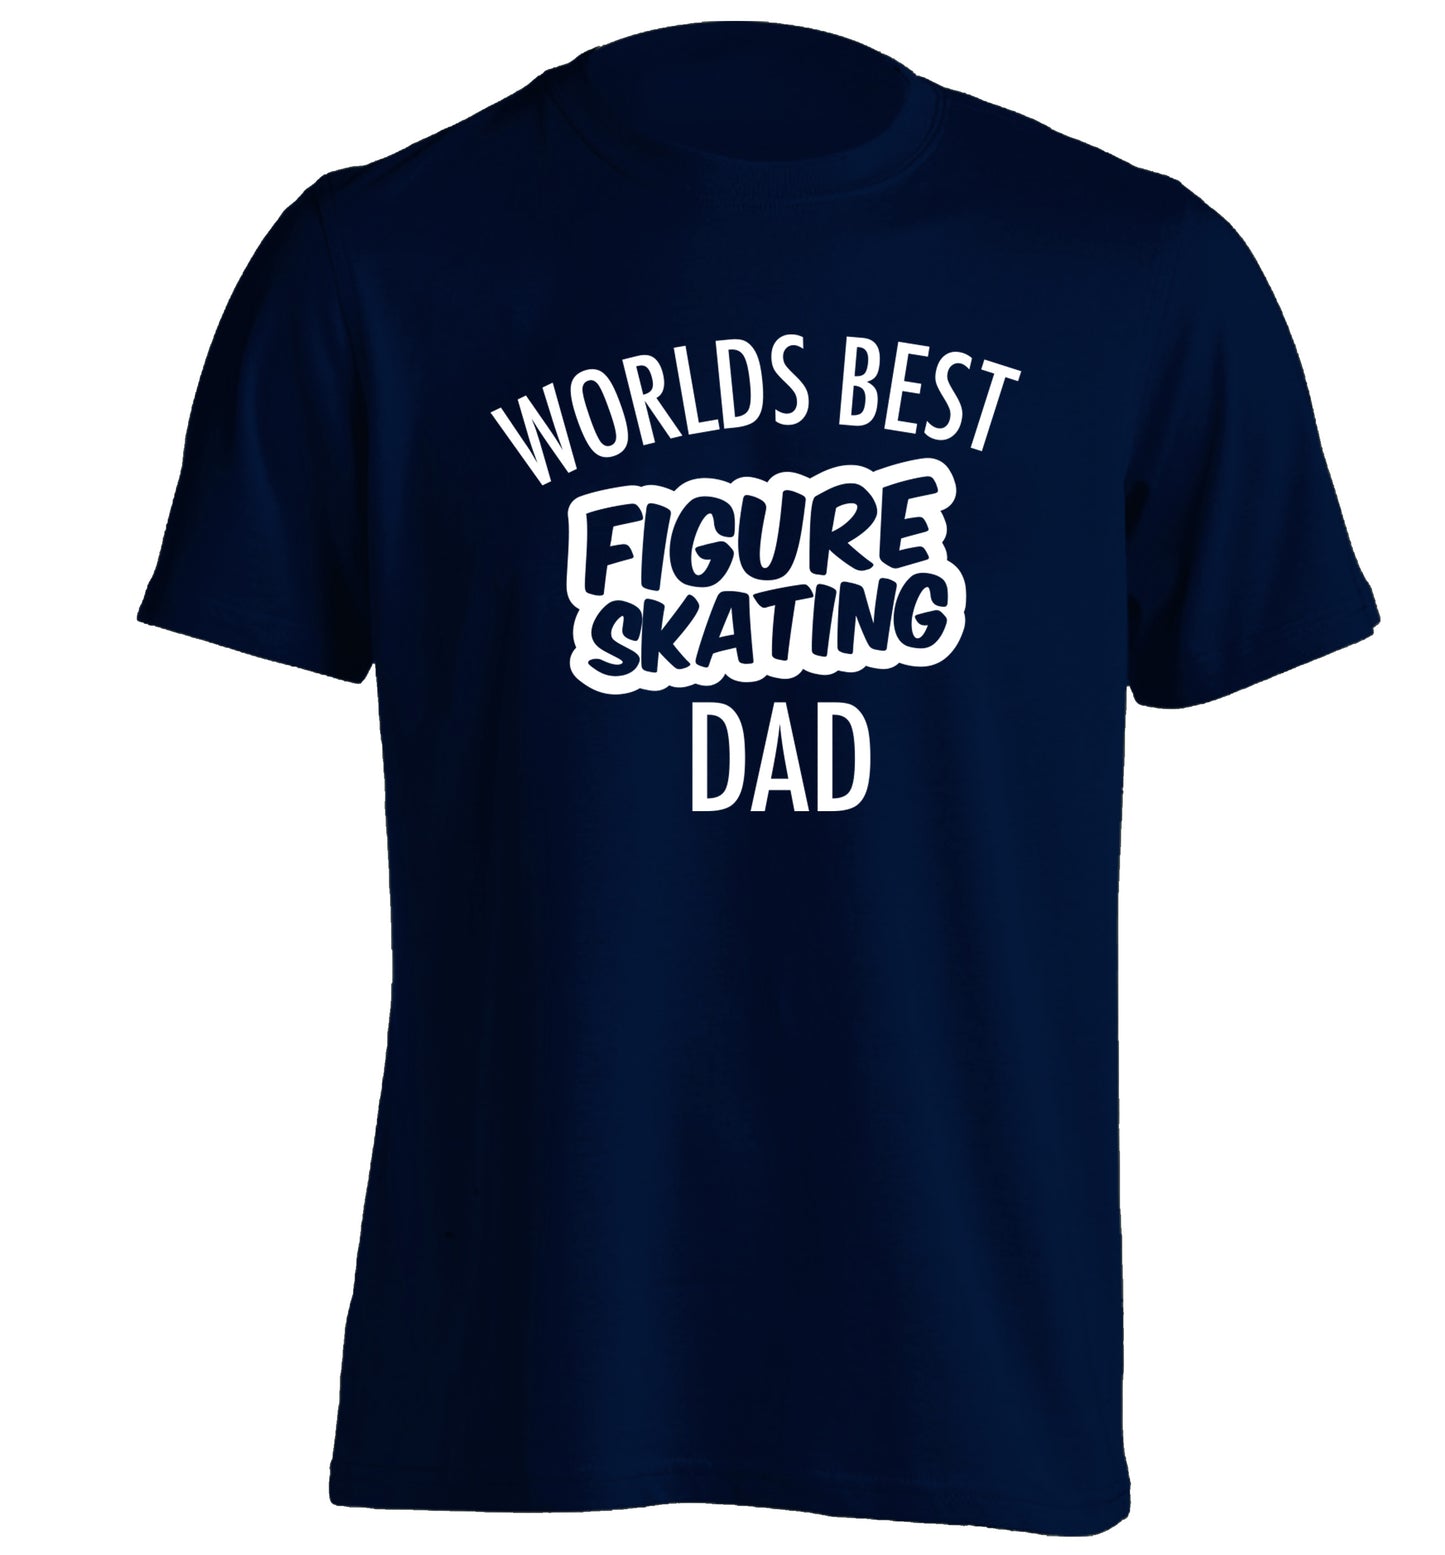 Worlds best figure skating dad adults unisexnavy Tshirt 2XL